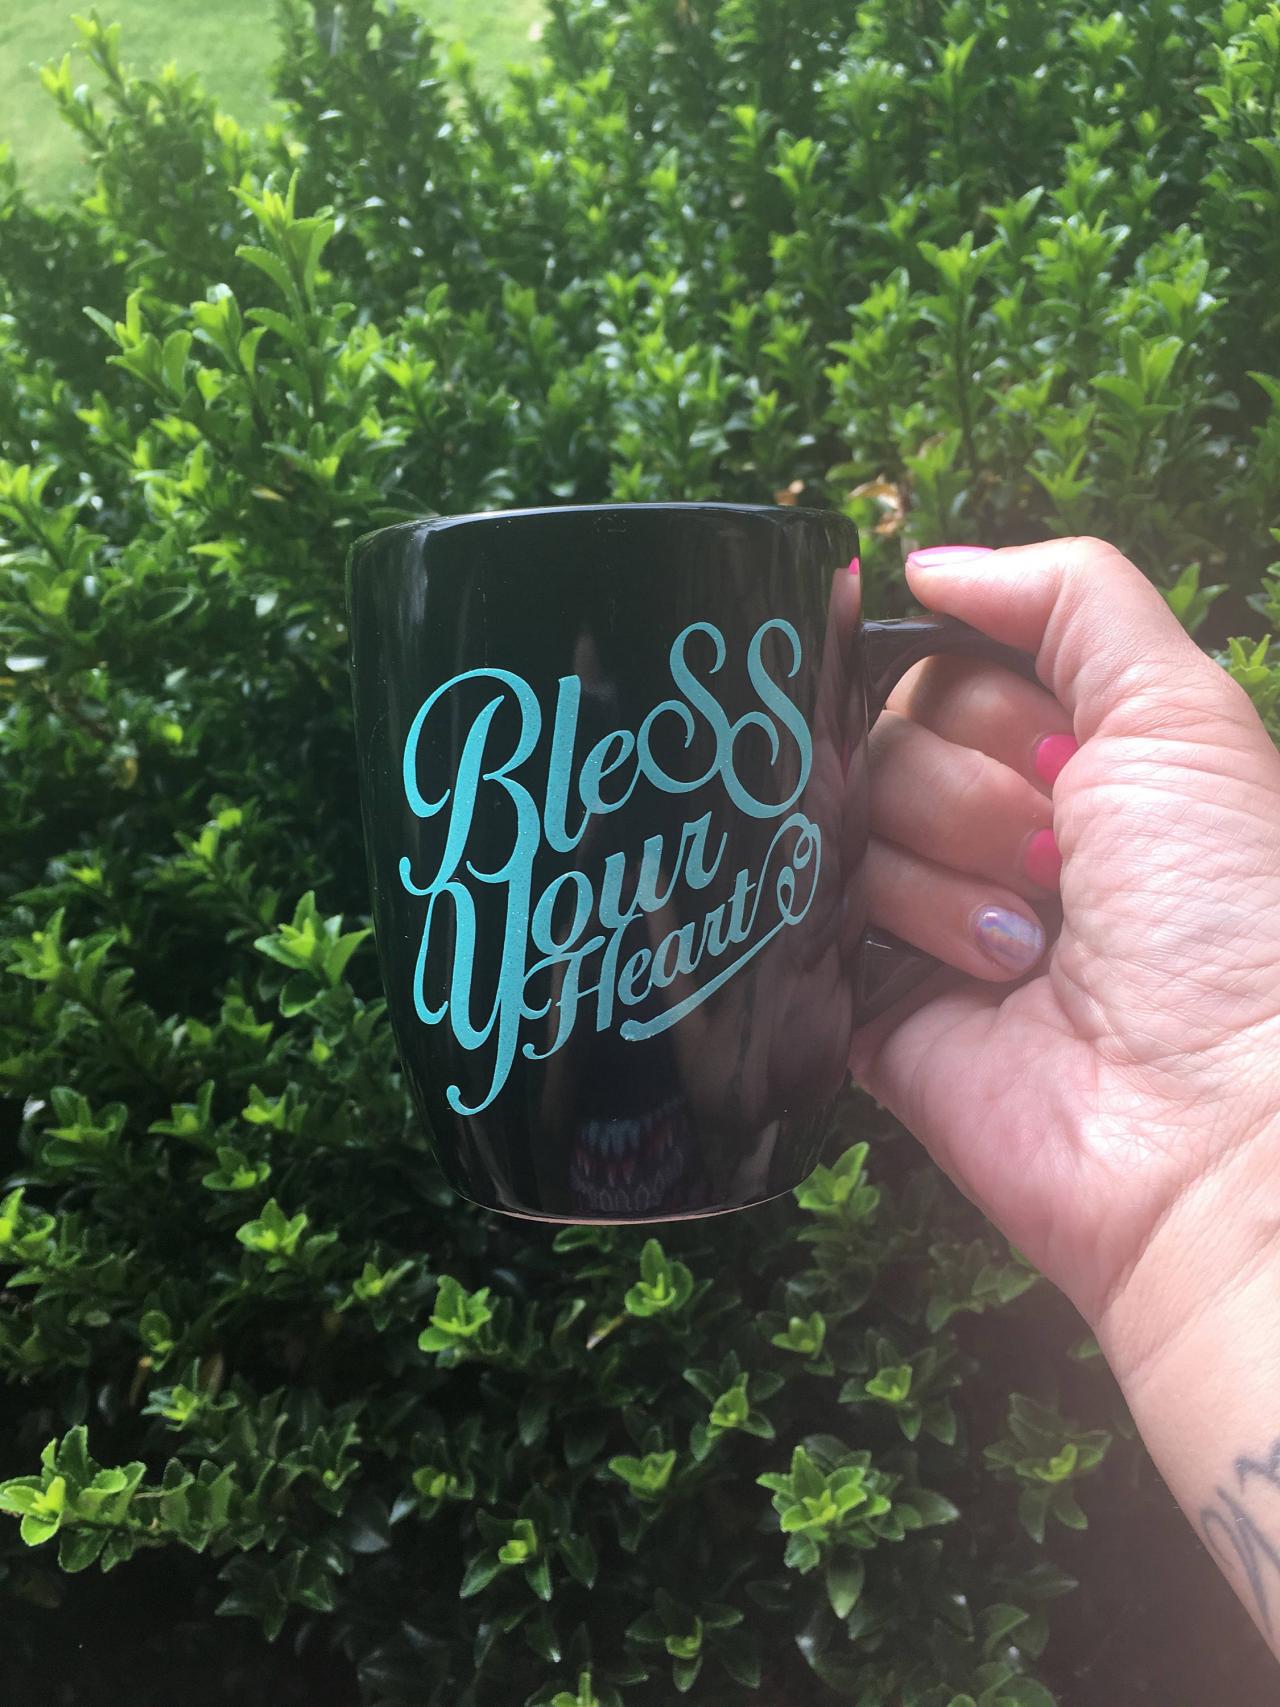 Bless your heart coffee/tea mug